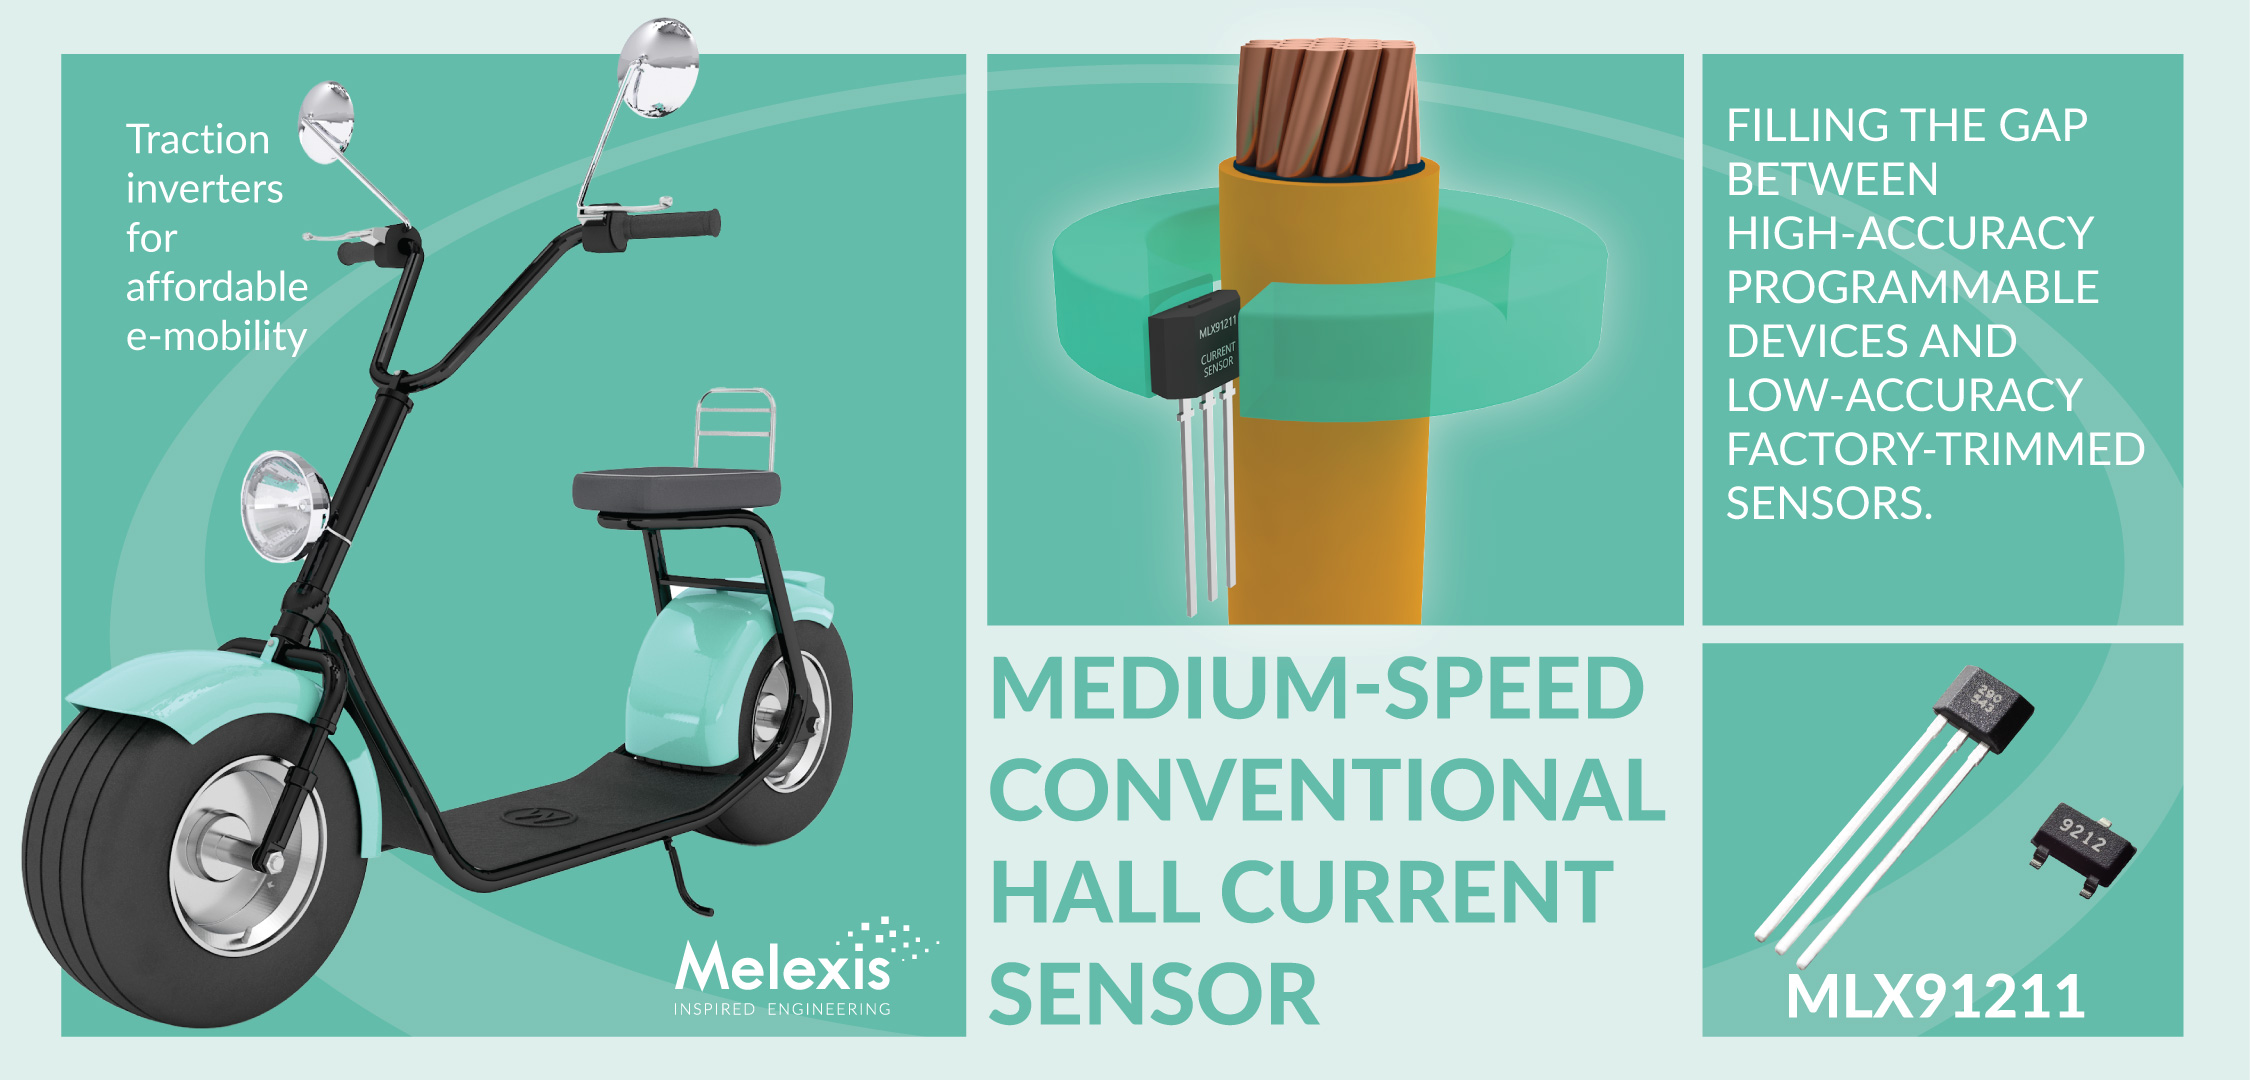 Melexis 推出针对经济适用型电动汽车进行优化的高精度电流传感器 IC